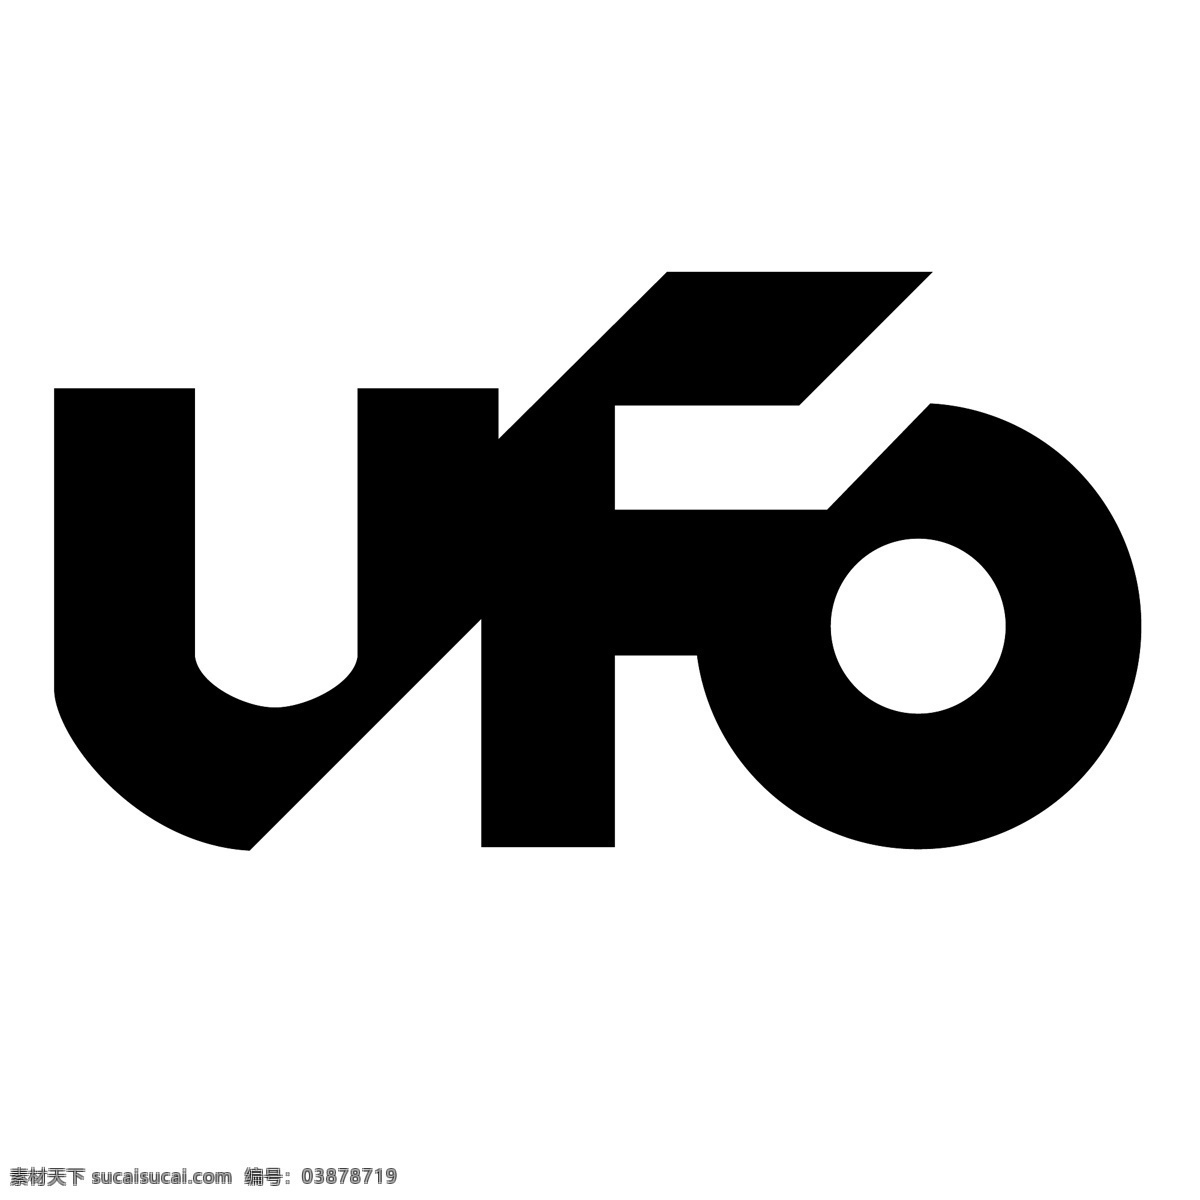 ufo 系统 标识 公司 免费 品牌 品牌标识 商标 矢量标志下载 免费矢量标识 矢量 psd源文件 logo设计